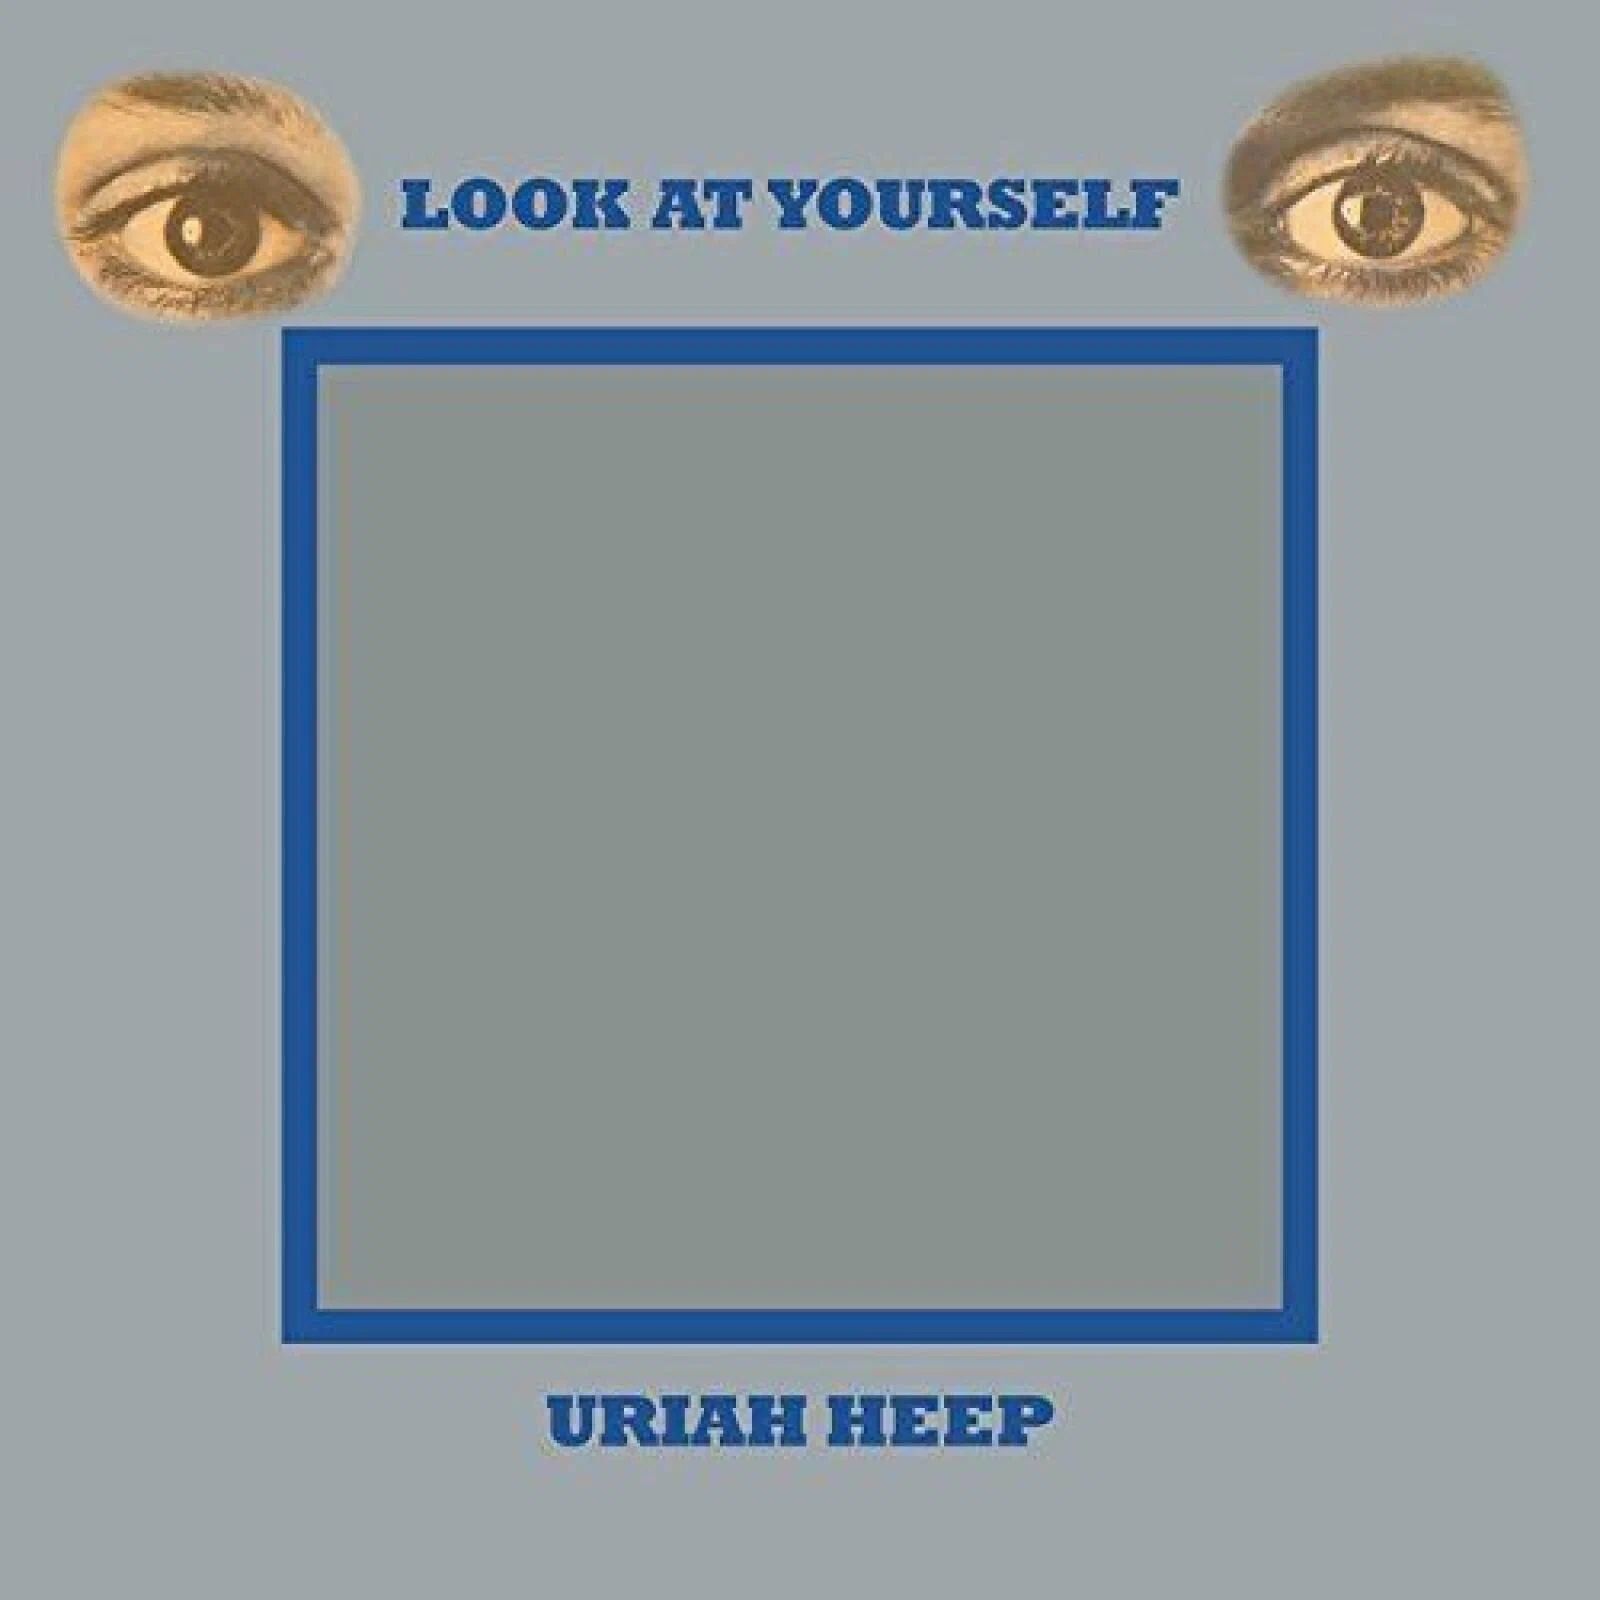 bmg uriah heep look at yourself виниловая пластинка Виниловая пластинка Uriah Heep, Look At Yourself (coloured) (4050538679243) отличное состояние;